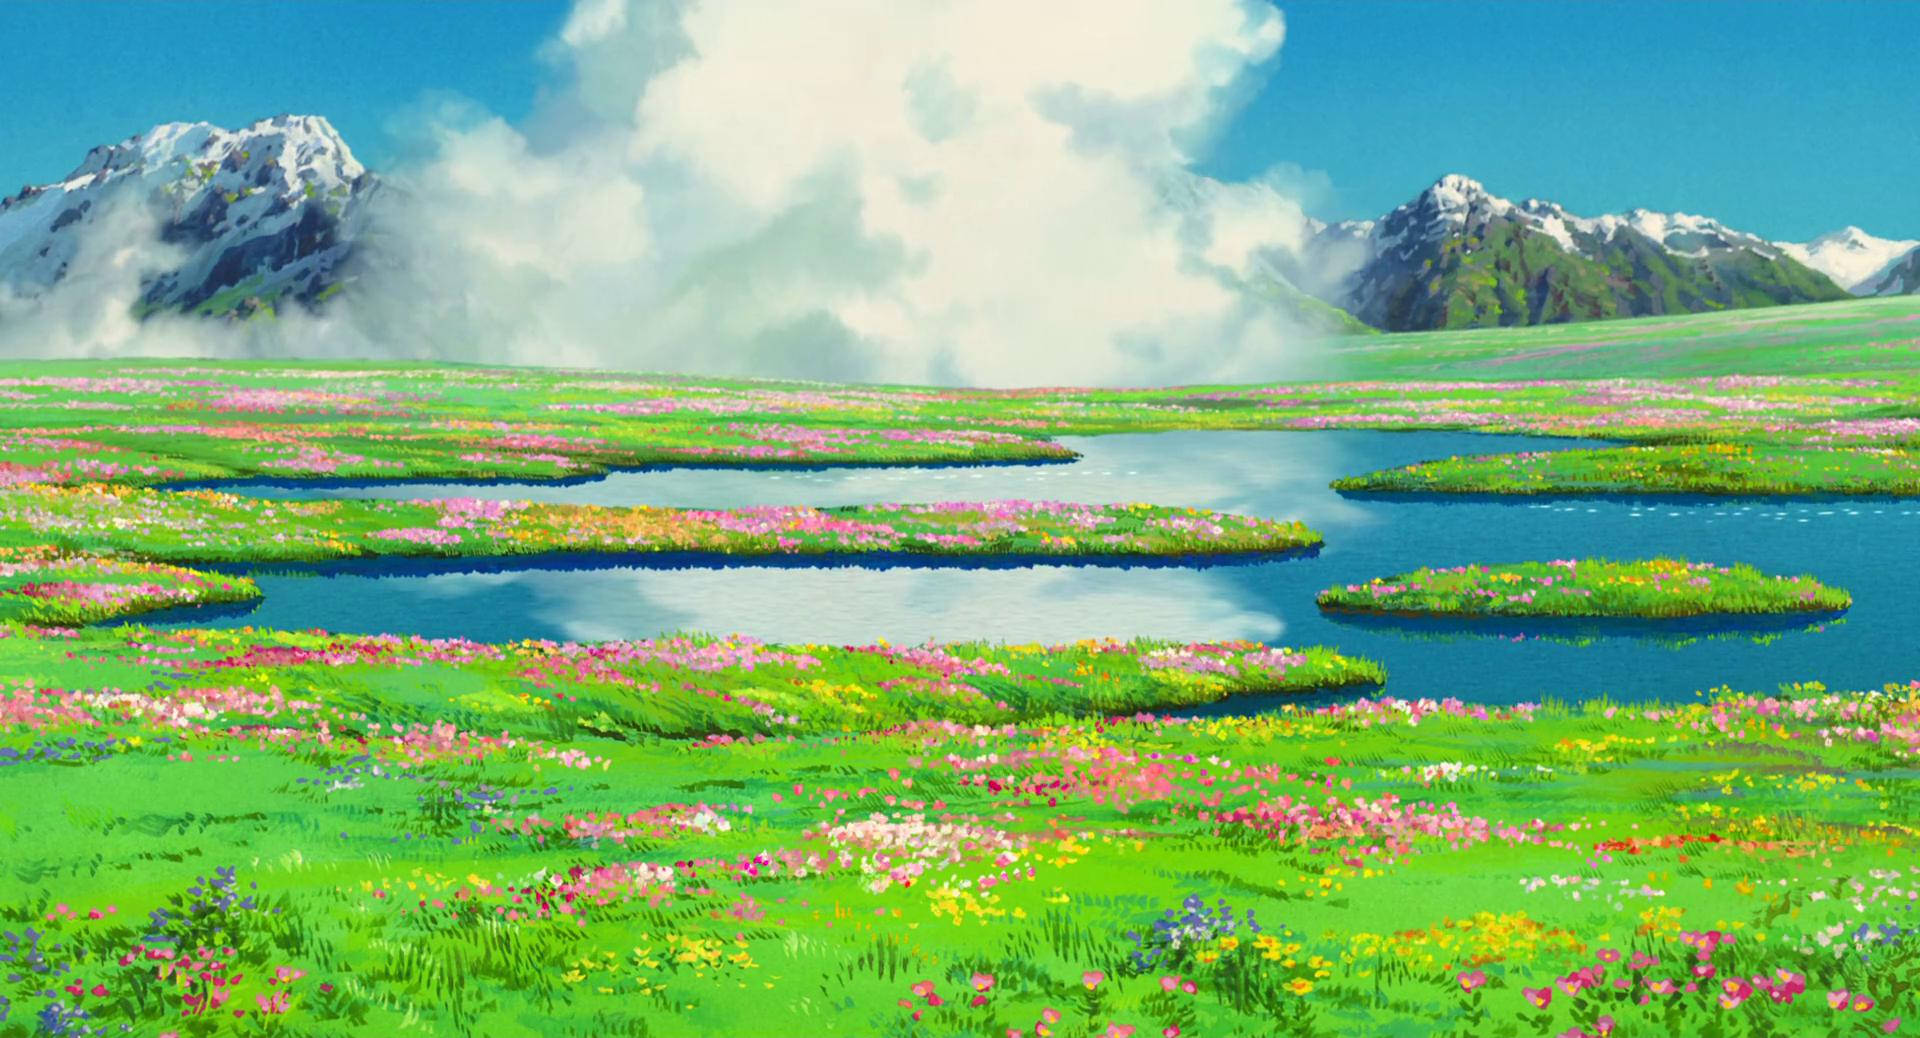 Studio Ghibli Howl's Garden Background